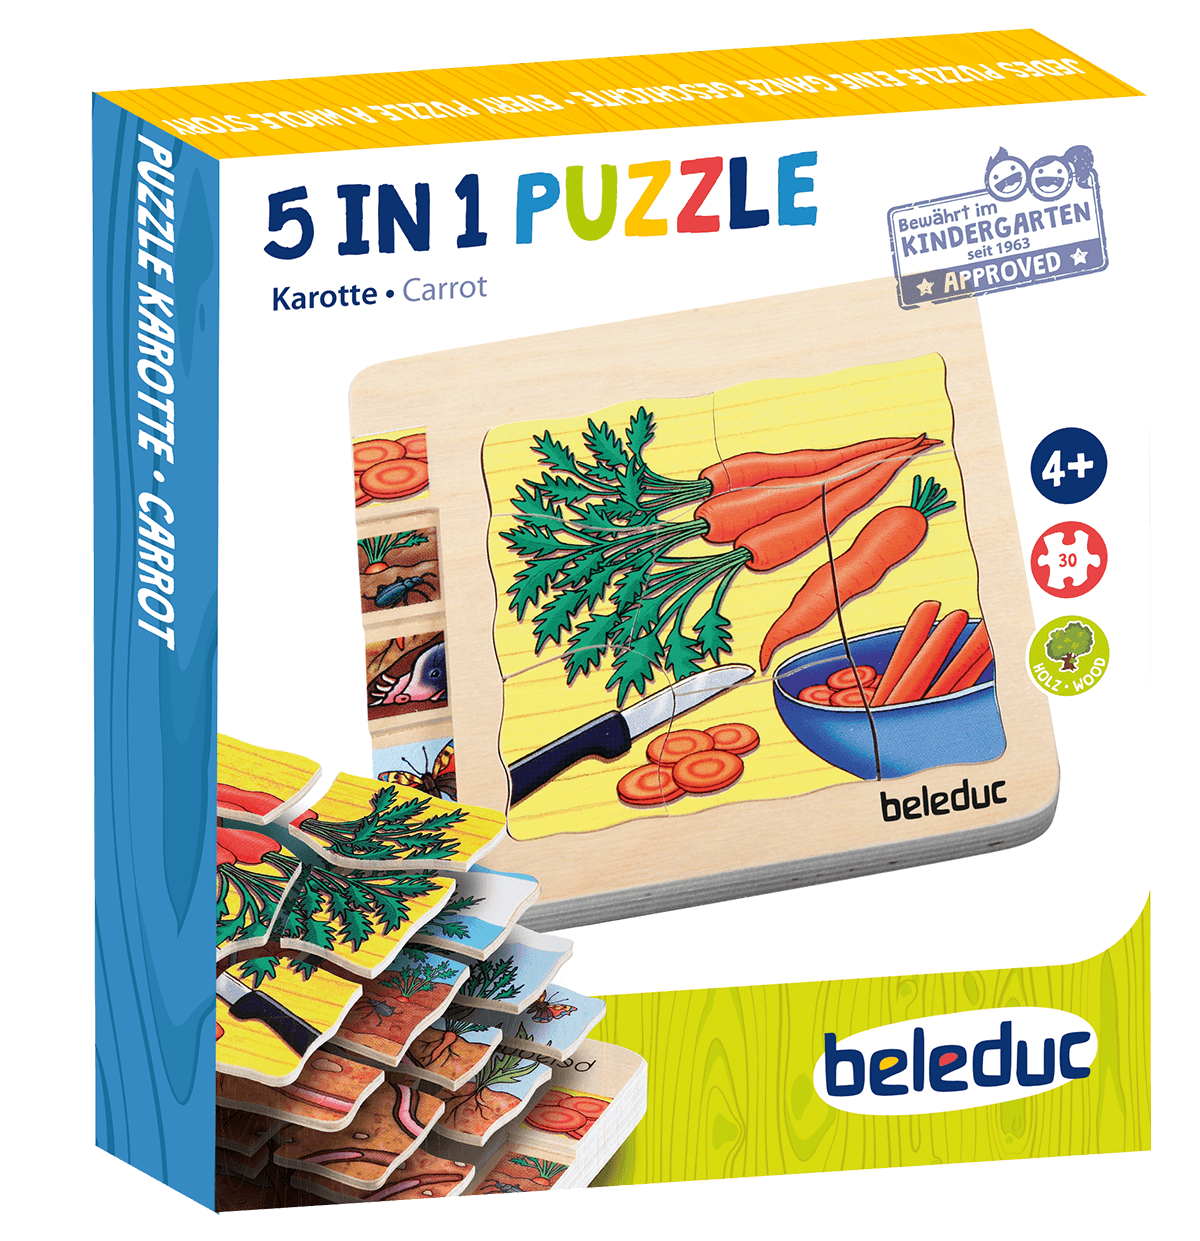 Beleduc Layer-Puzzle Carrot 胡蘿蔔生長多層情景找找看拼圖